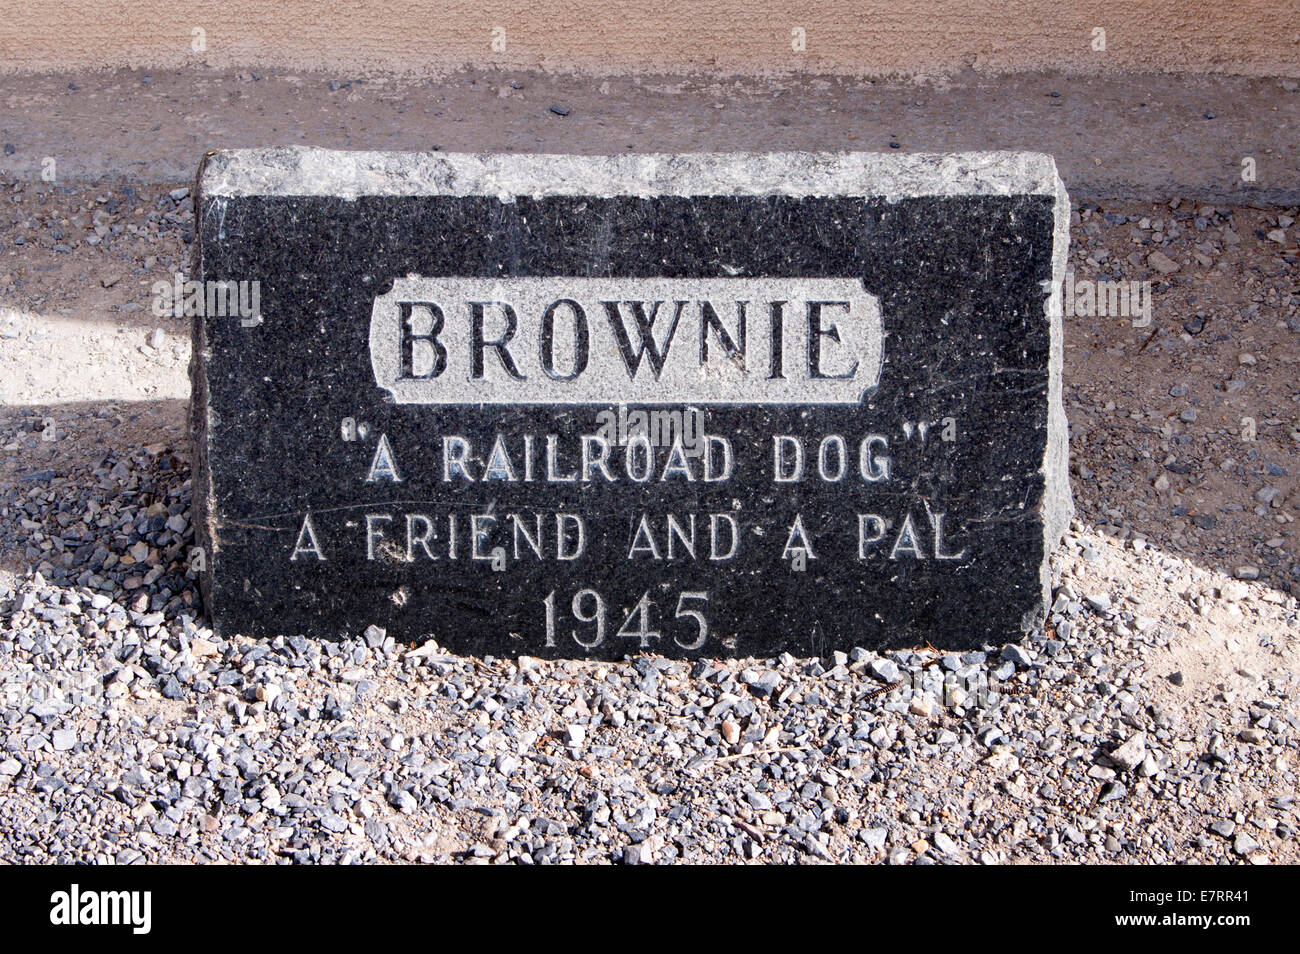 Brownie the Railroad Dog gravestone in Victorville California Stock Photo